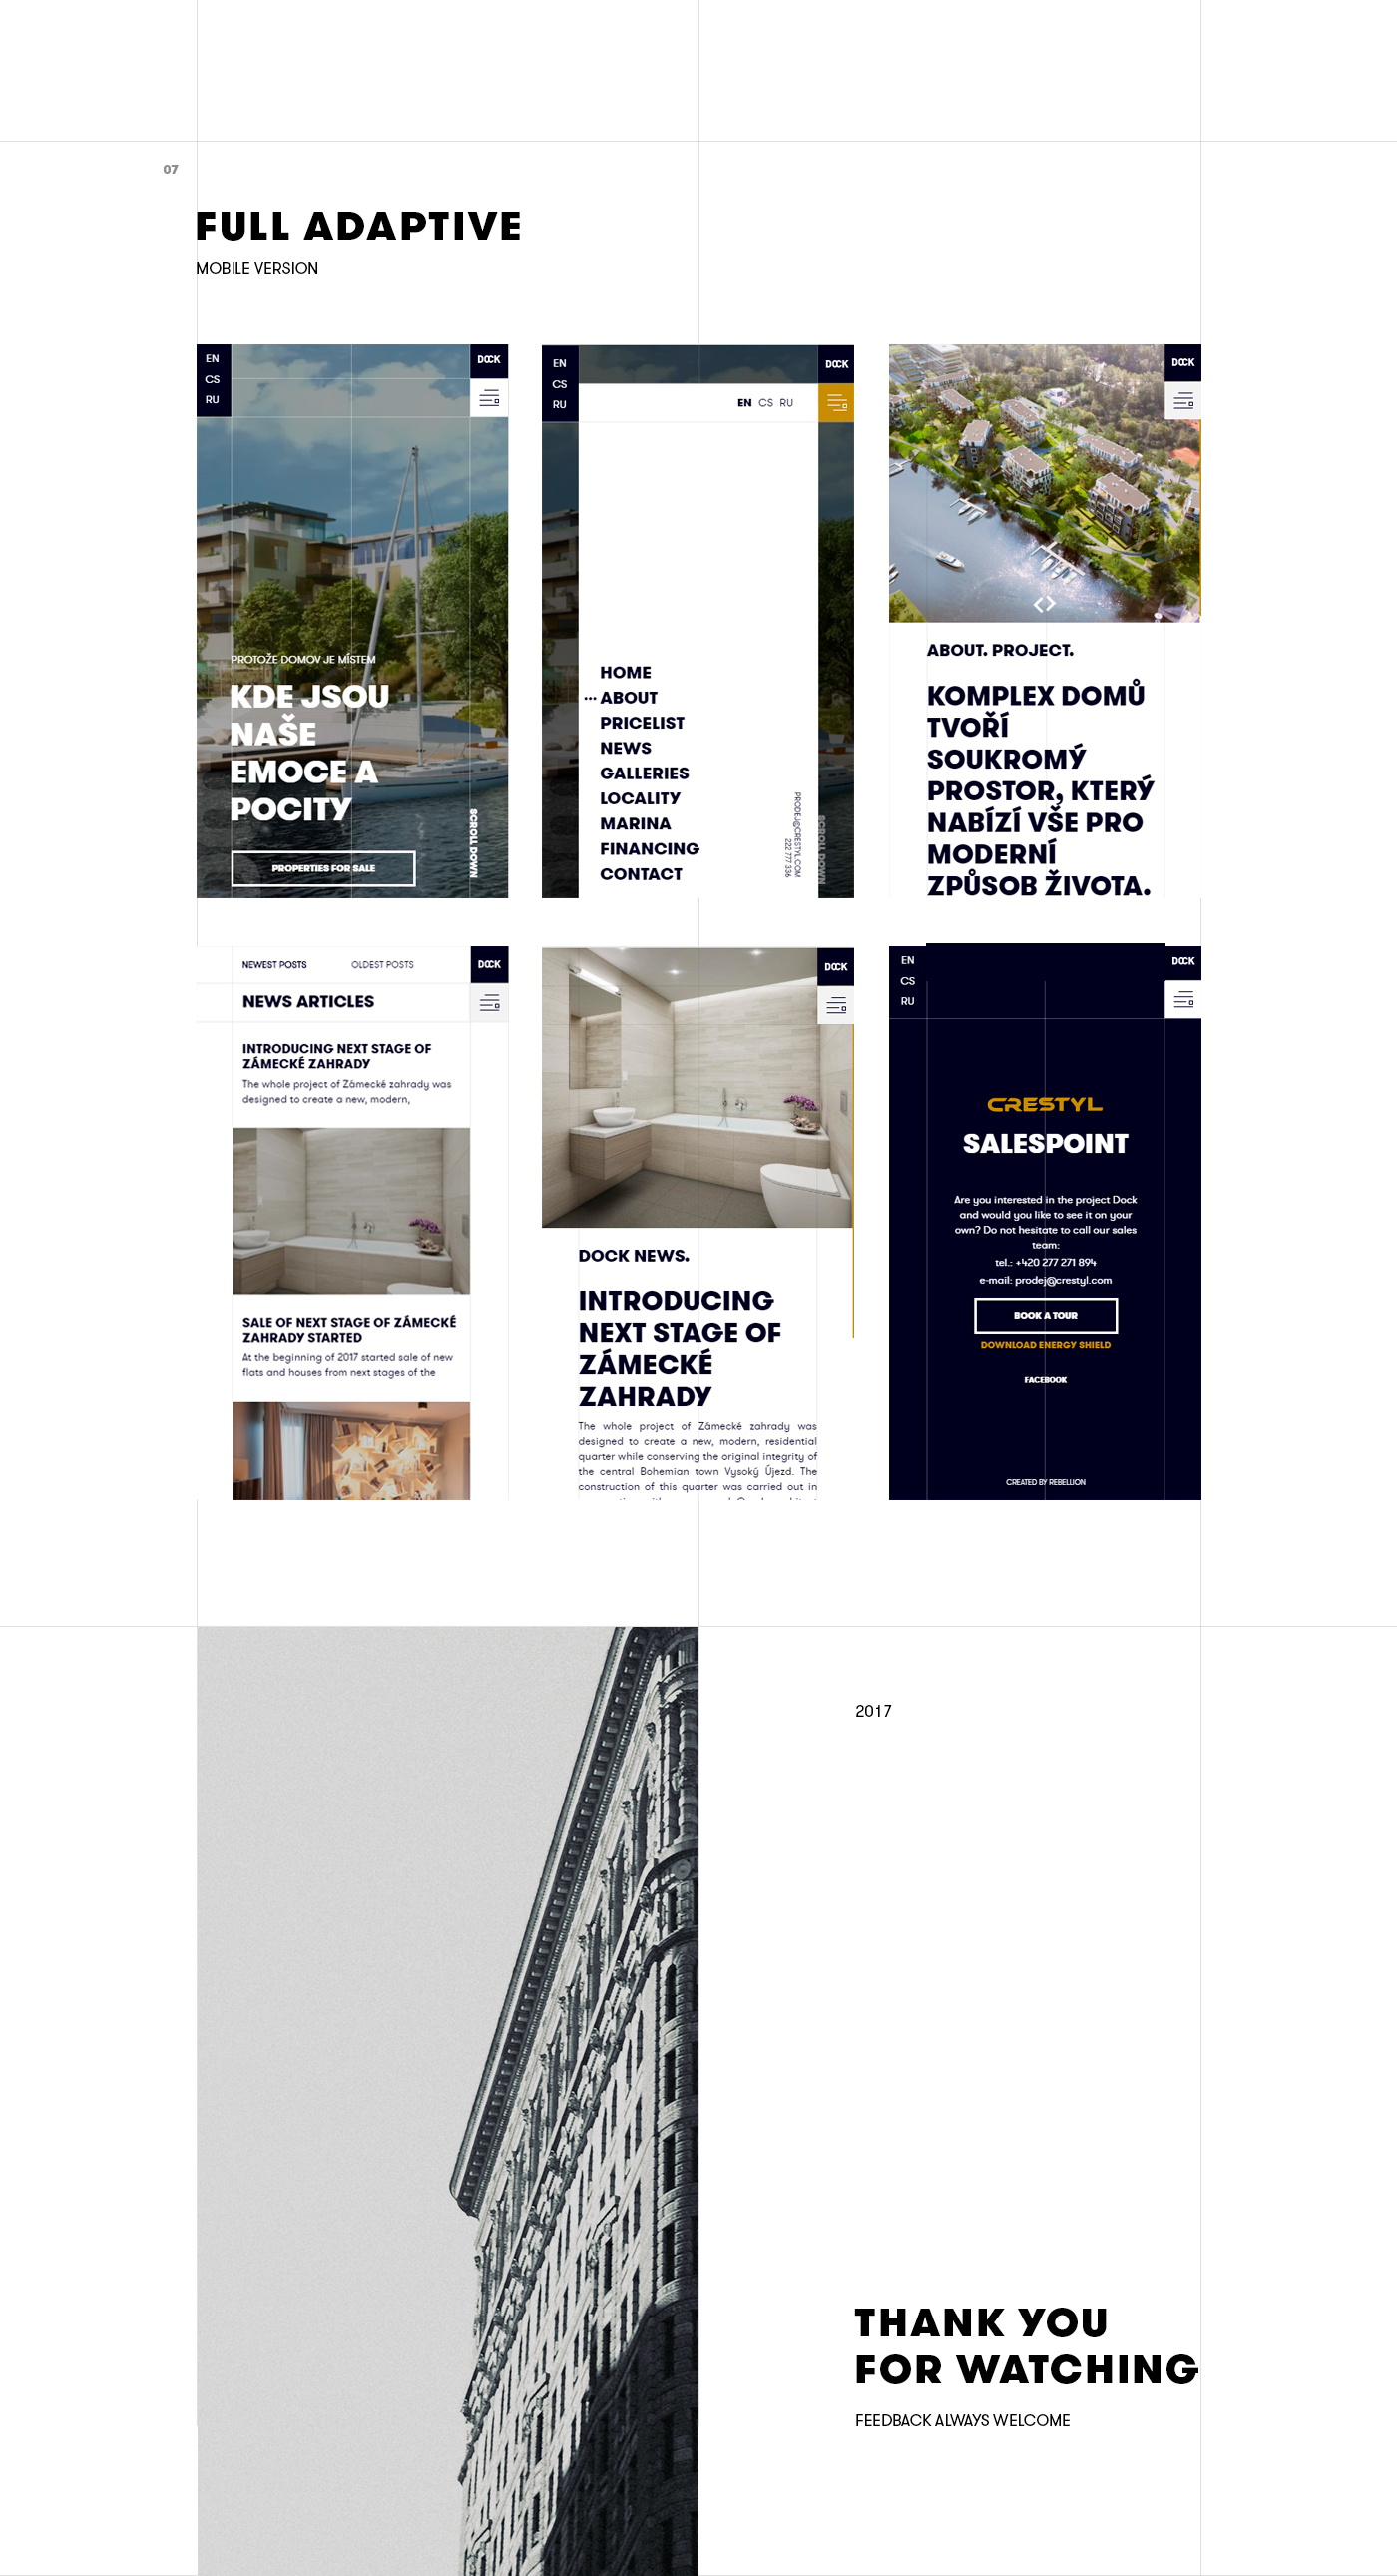 UI ux Webdesign inspire Website architecture digital Interface minimal Web